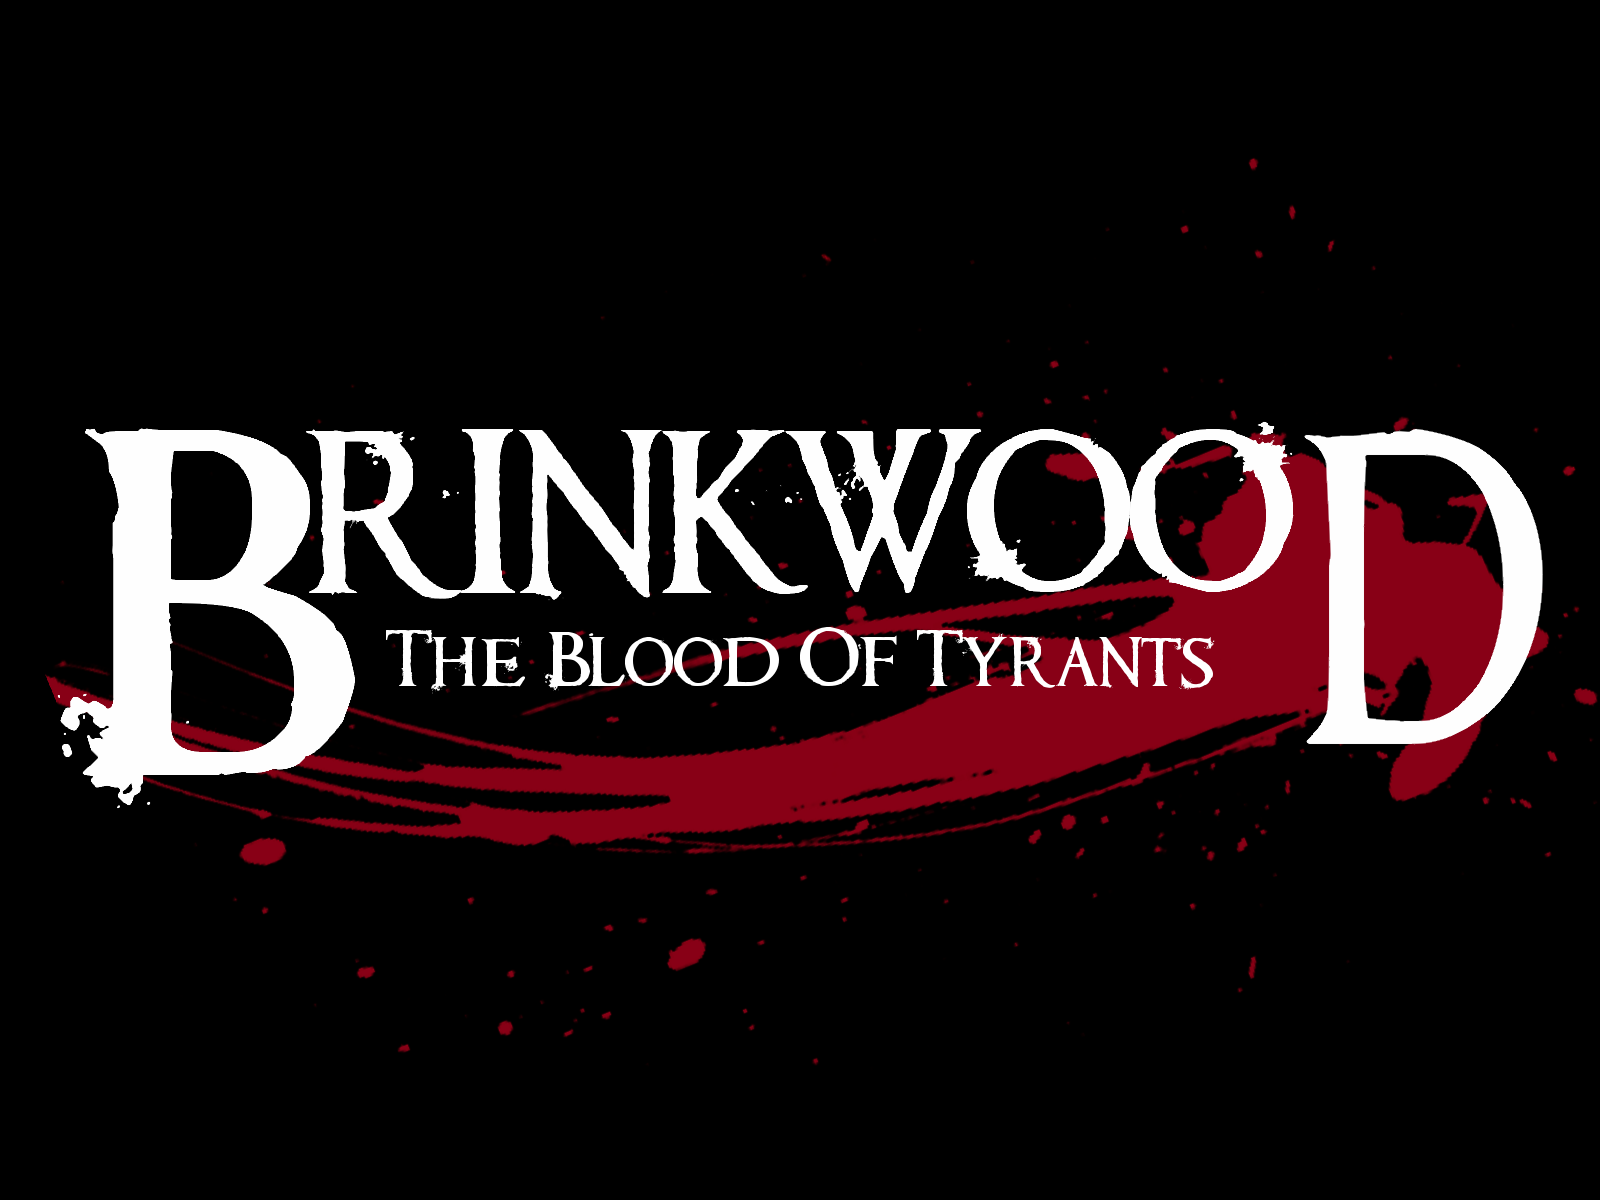 Brinkwood